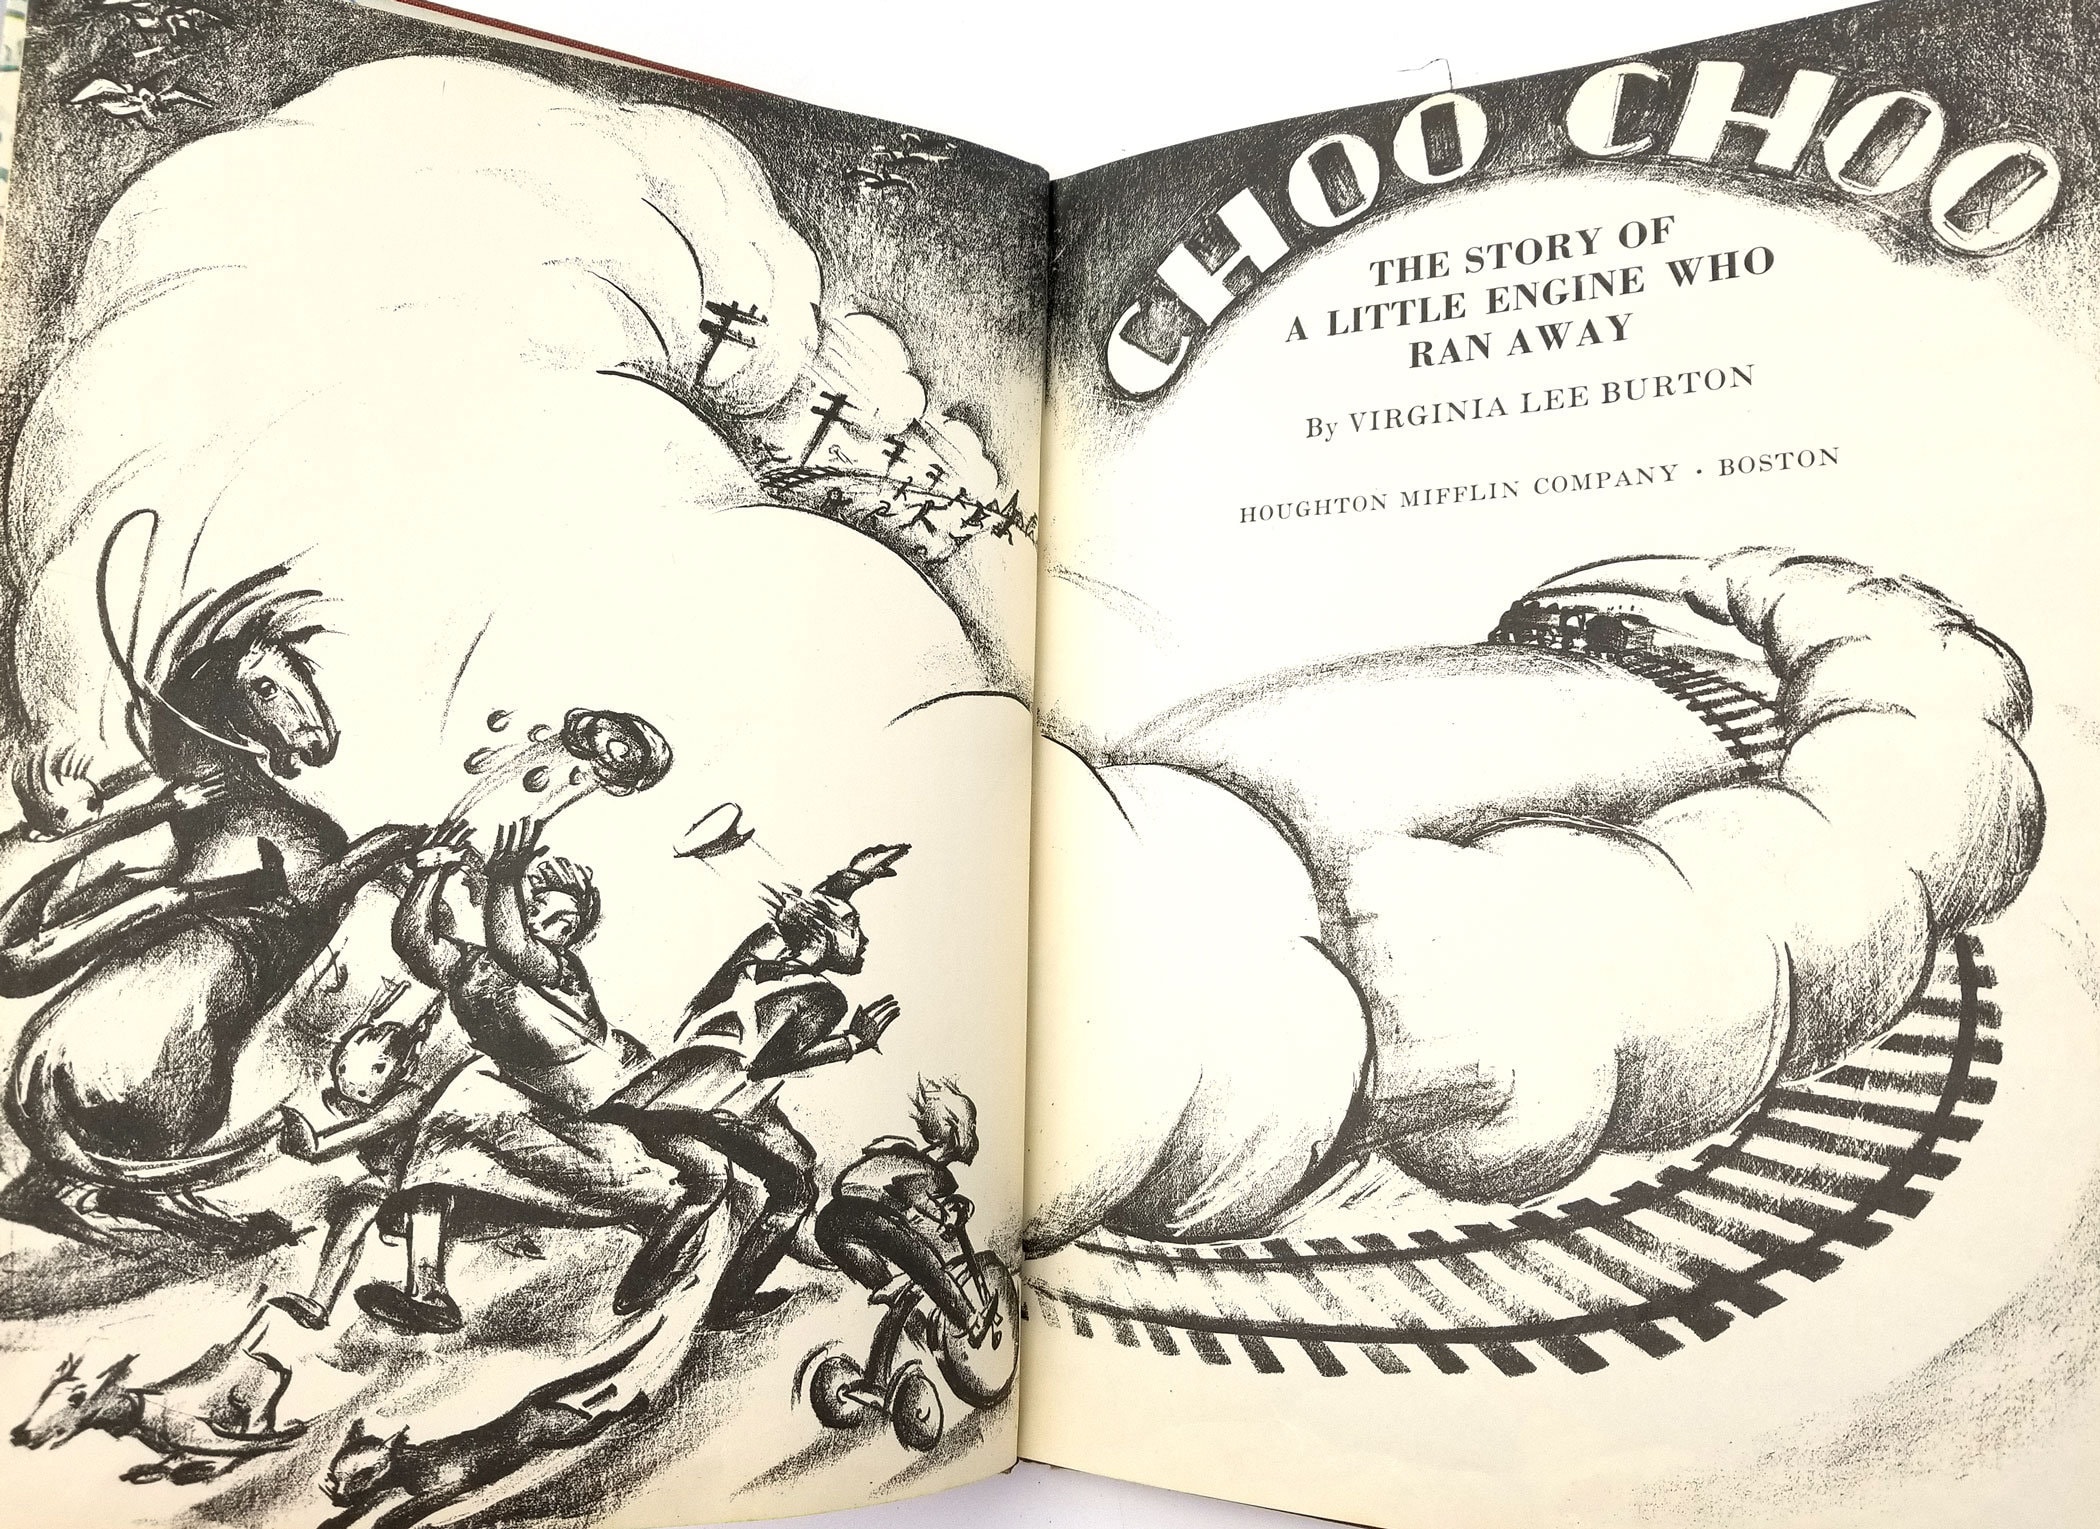 Choo Choo (1937) (Literature) - TV Tropes